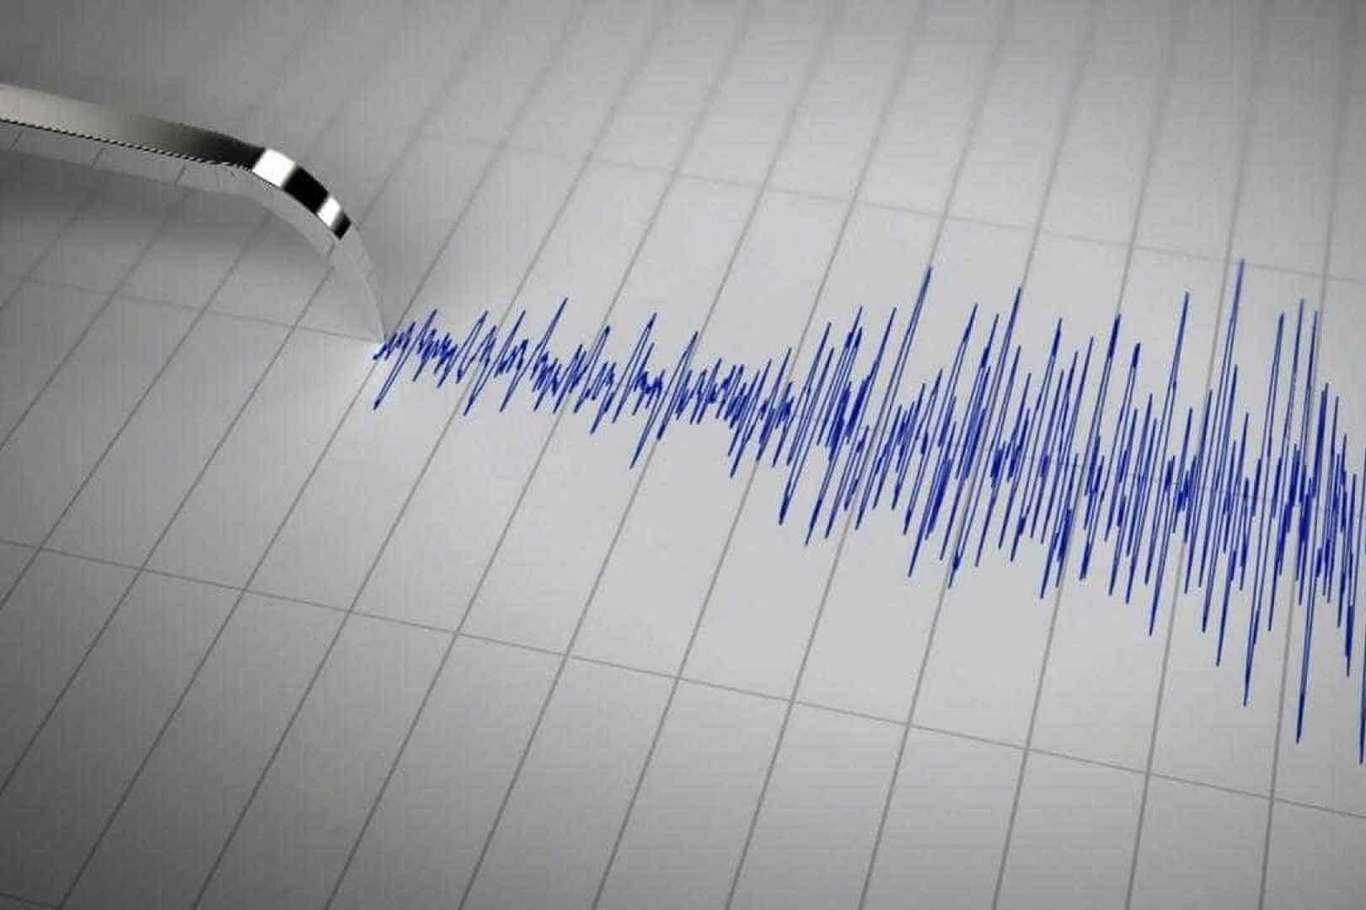 A 5.1 magnitude earthquake hits central Turkey